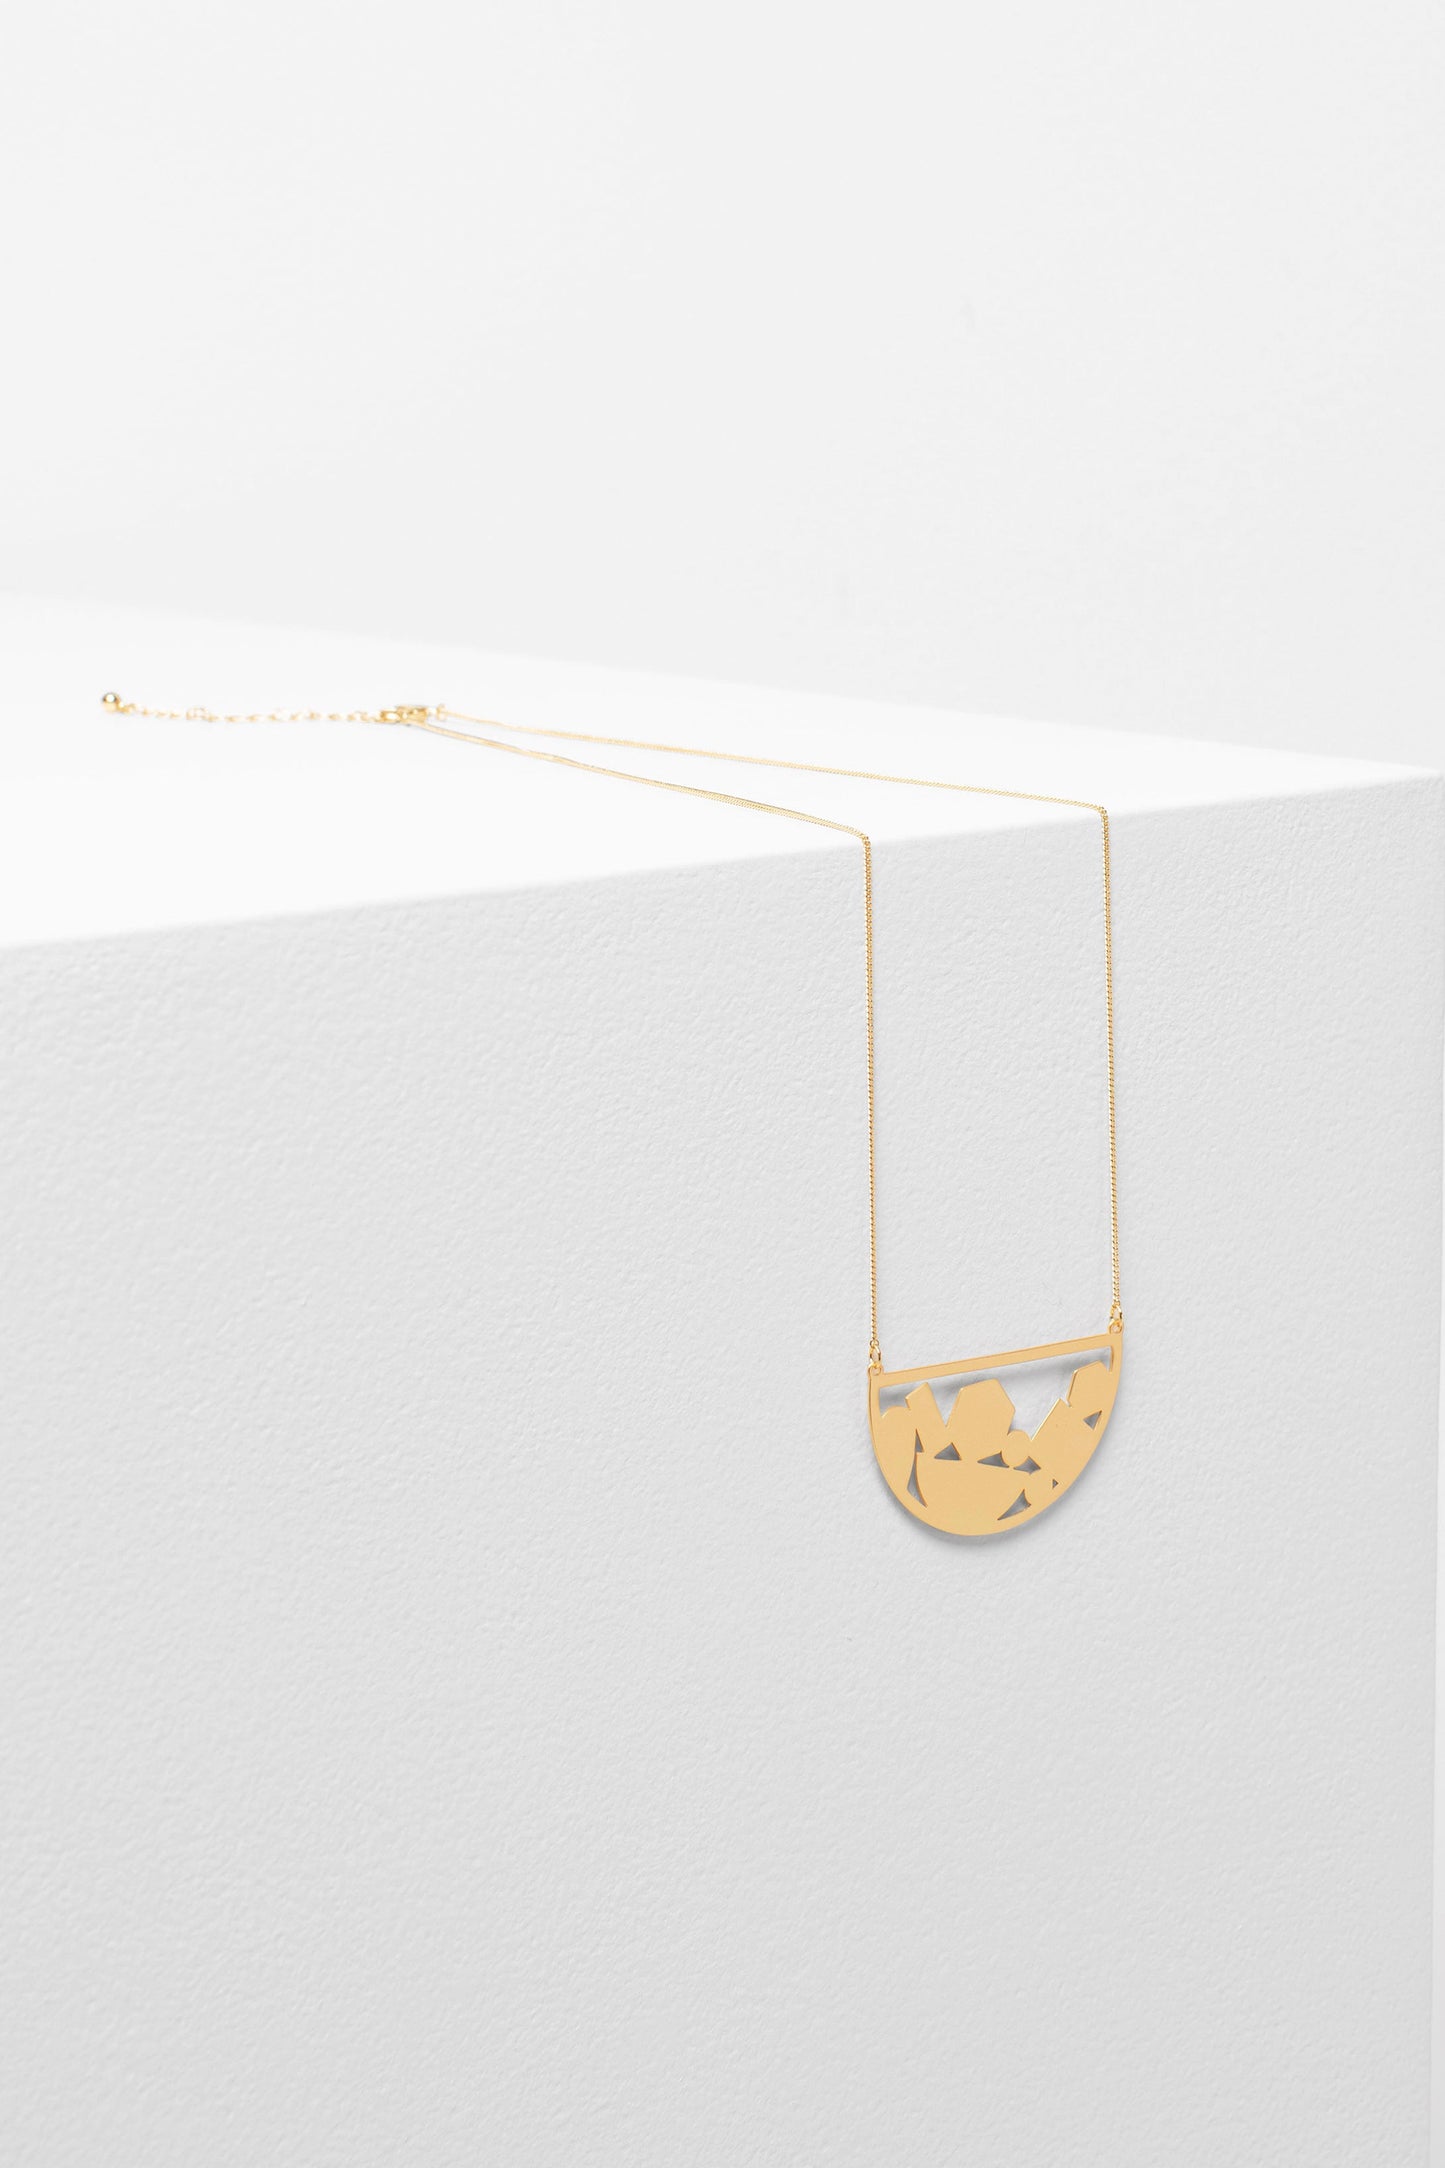 Taak Fine Metal Laser Cut Chain Pendant Necklace | GOLD 